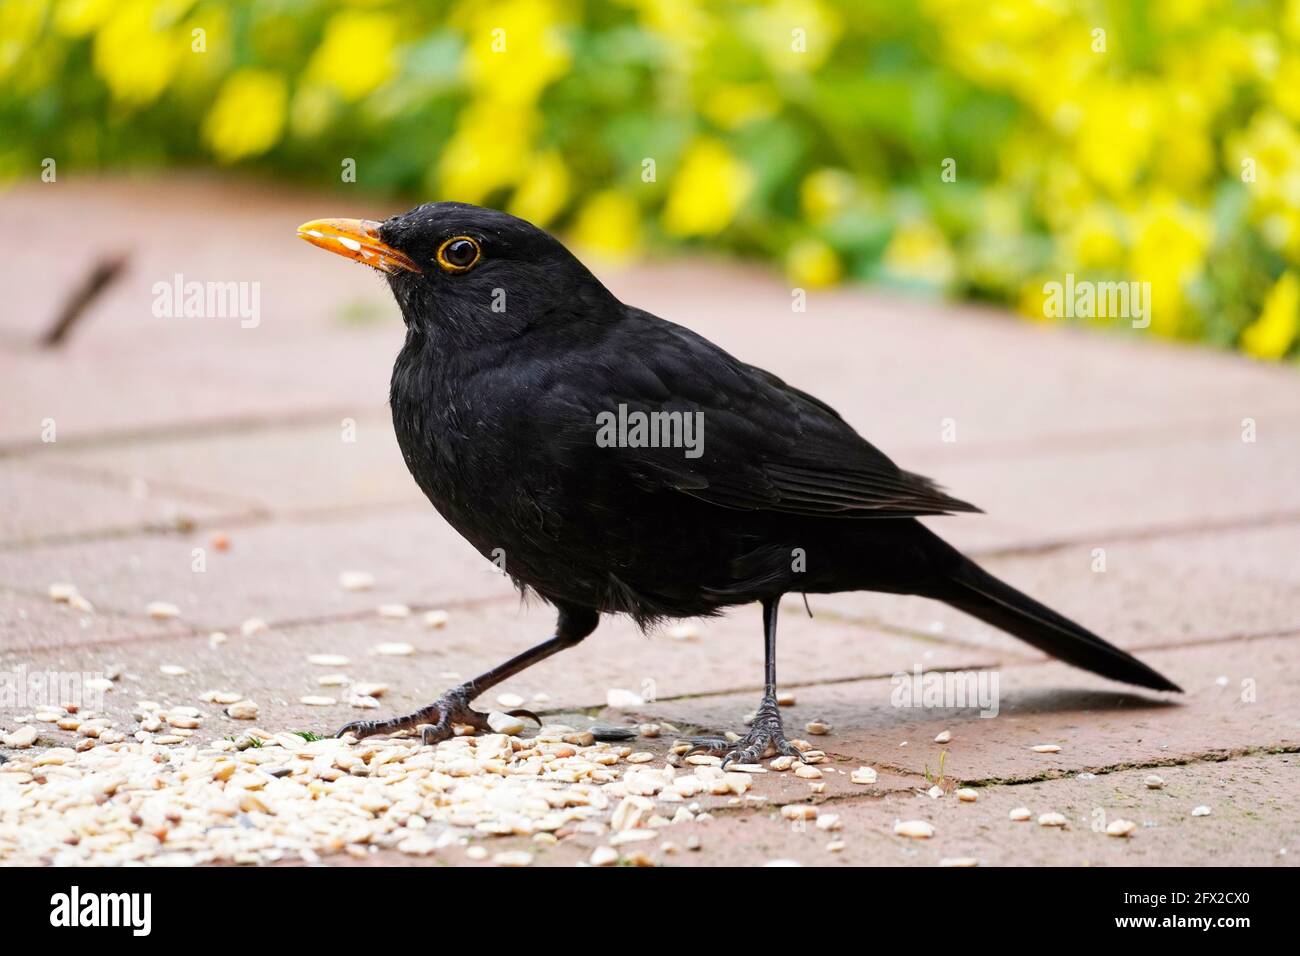 Blackbird on the terrace in the garden in close-up. Bird with black plumage and orange beak. Turdus merula. Stock Photo